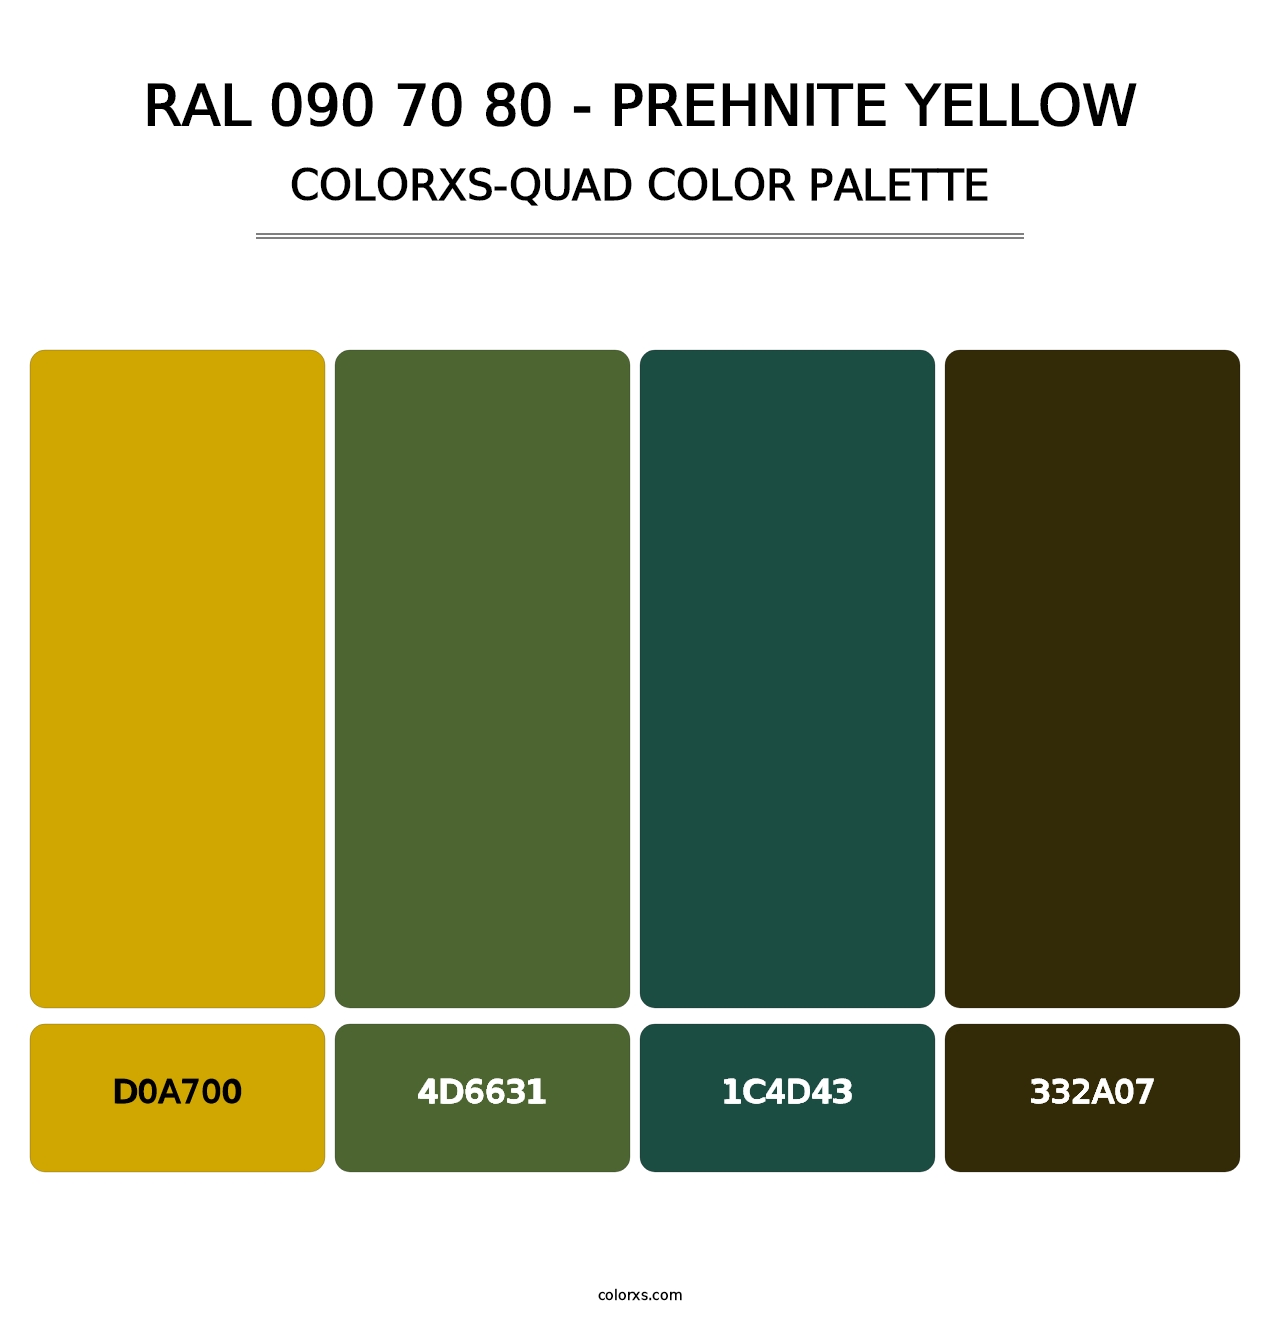 RAL 090 70 80 - Prehnite Yellow - Colorxs Quad Palette